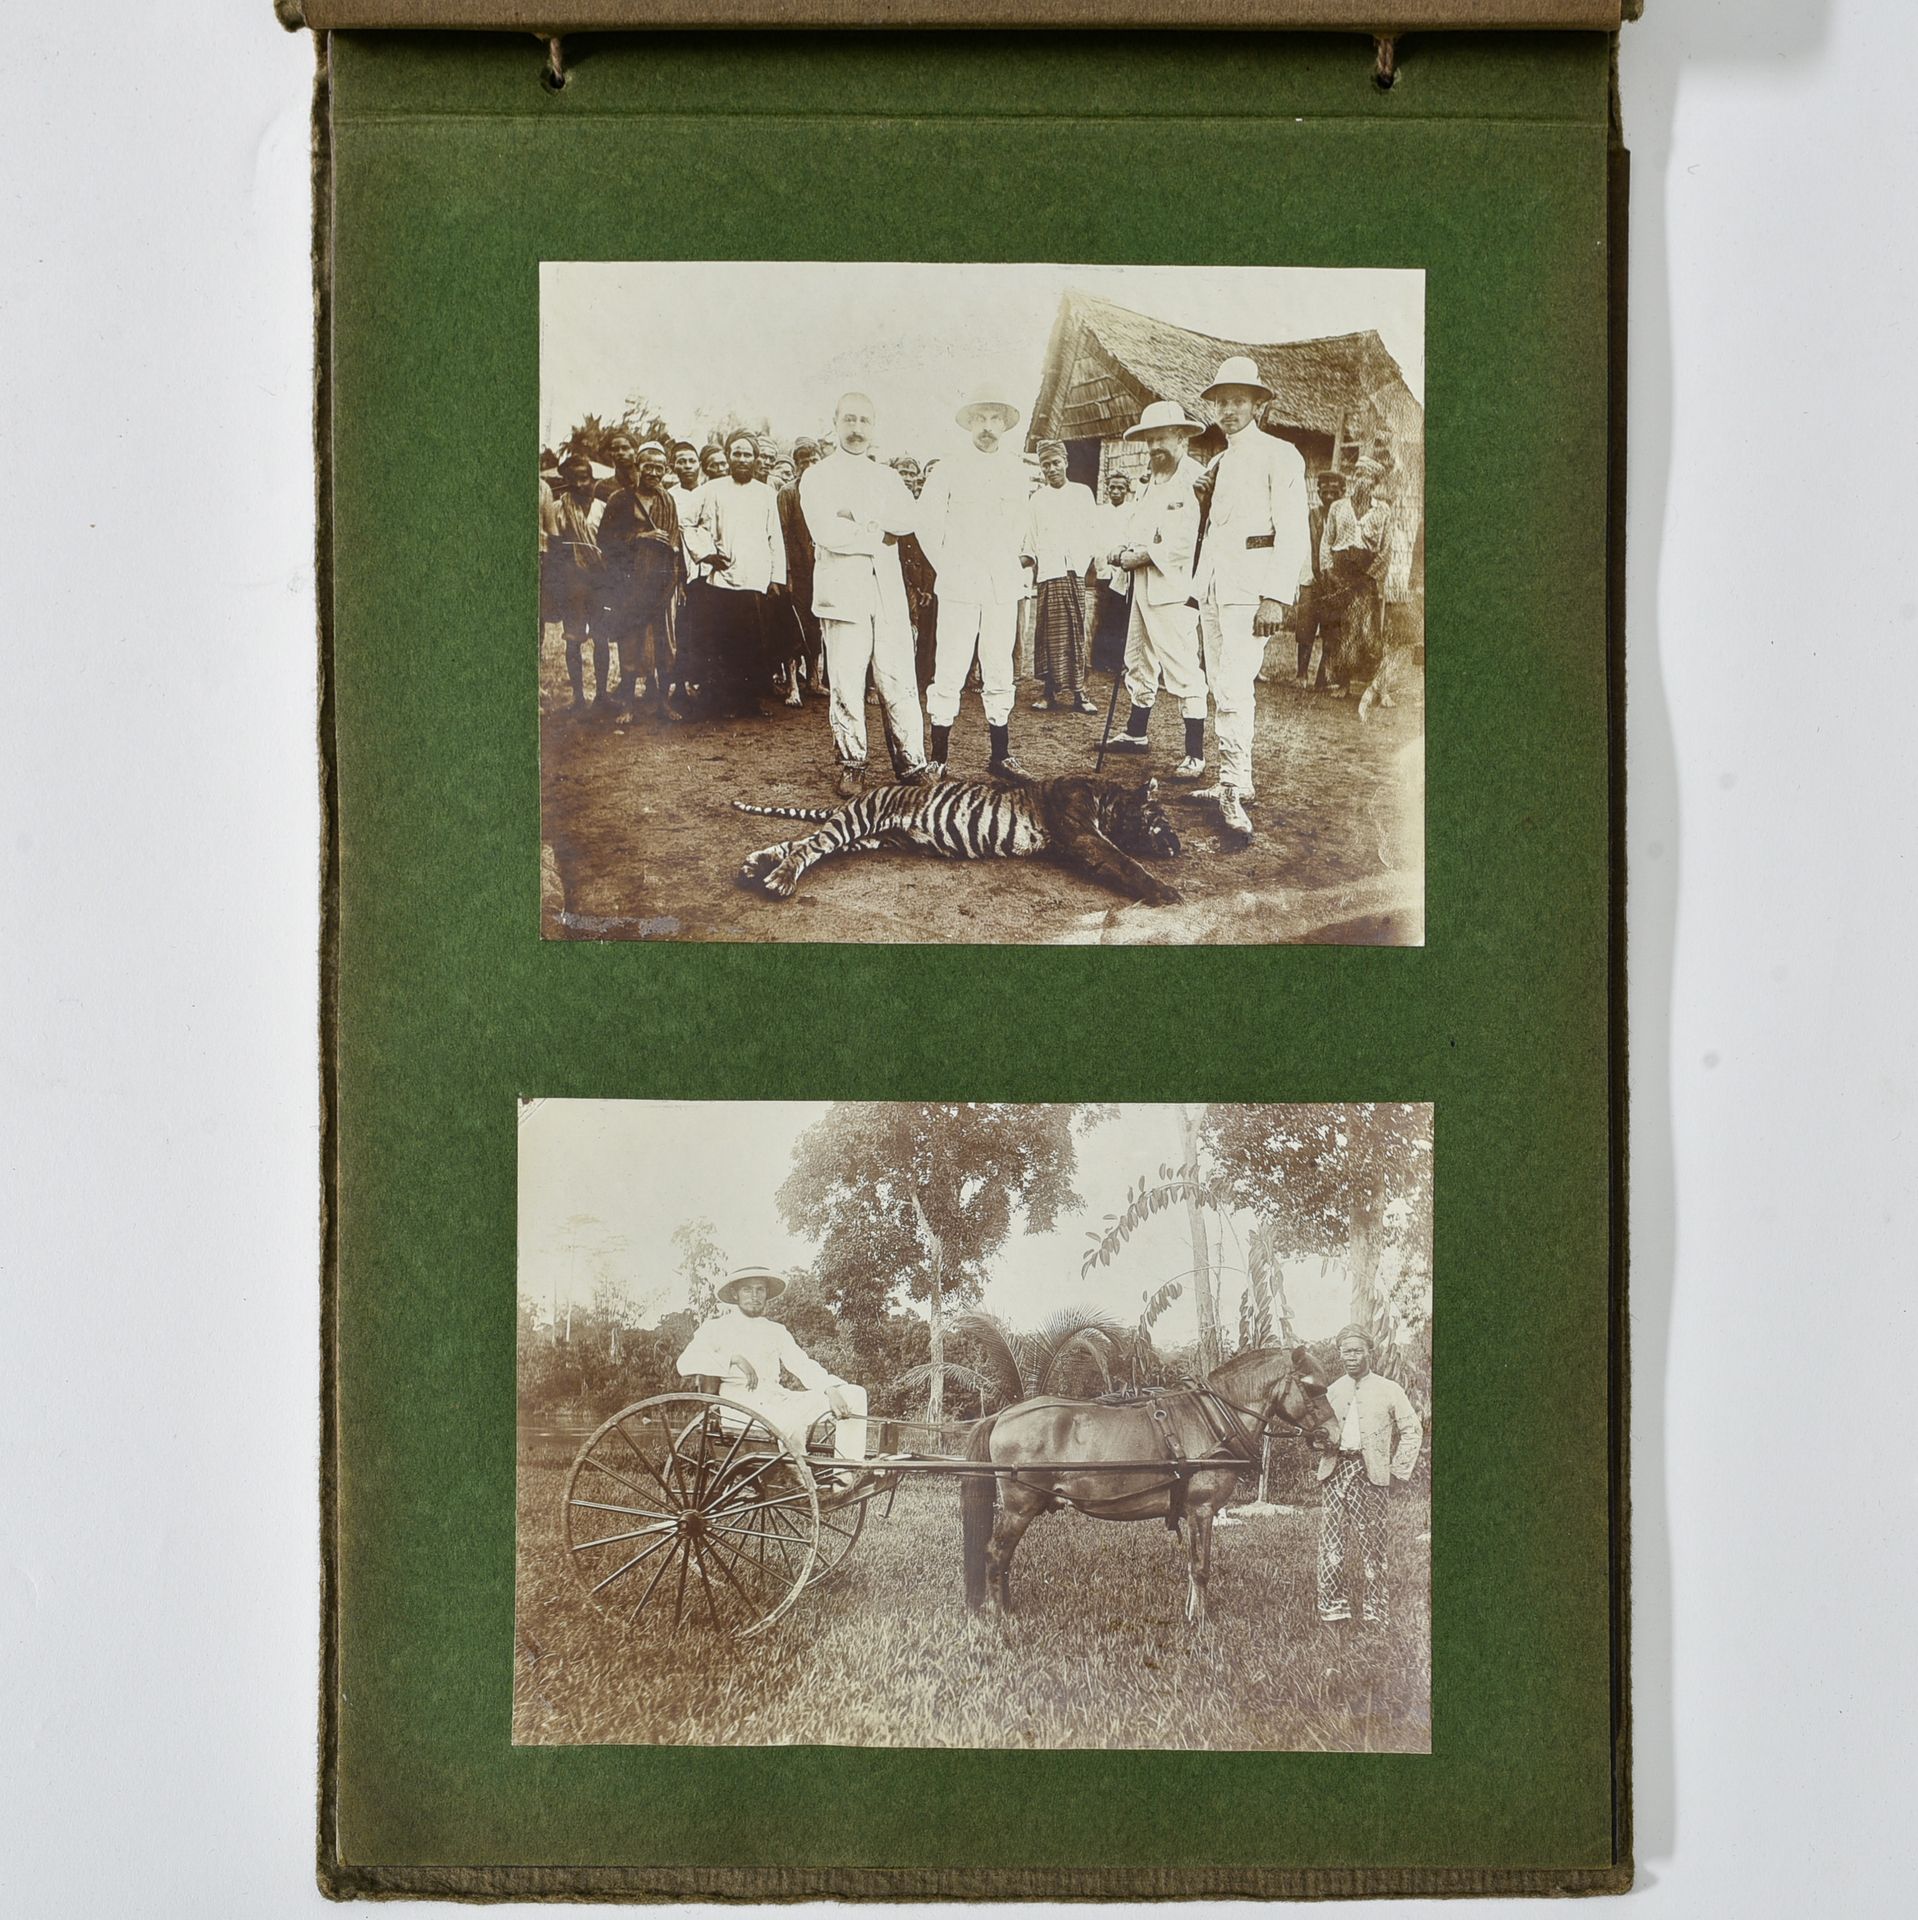 Album de photographies anciennes 1900年前后的印度尼西亚和比利时

老照片相册



意大利格式，包含63张黑白照片，大部分&hellip;